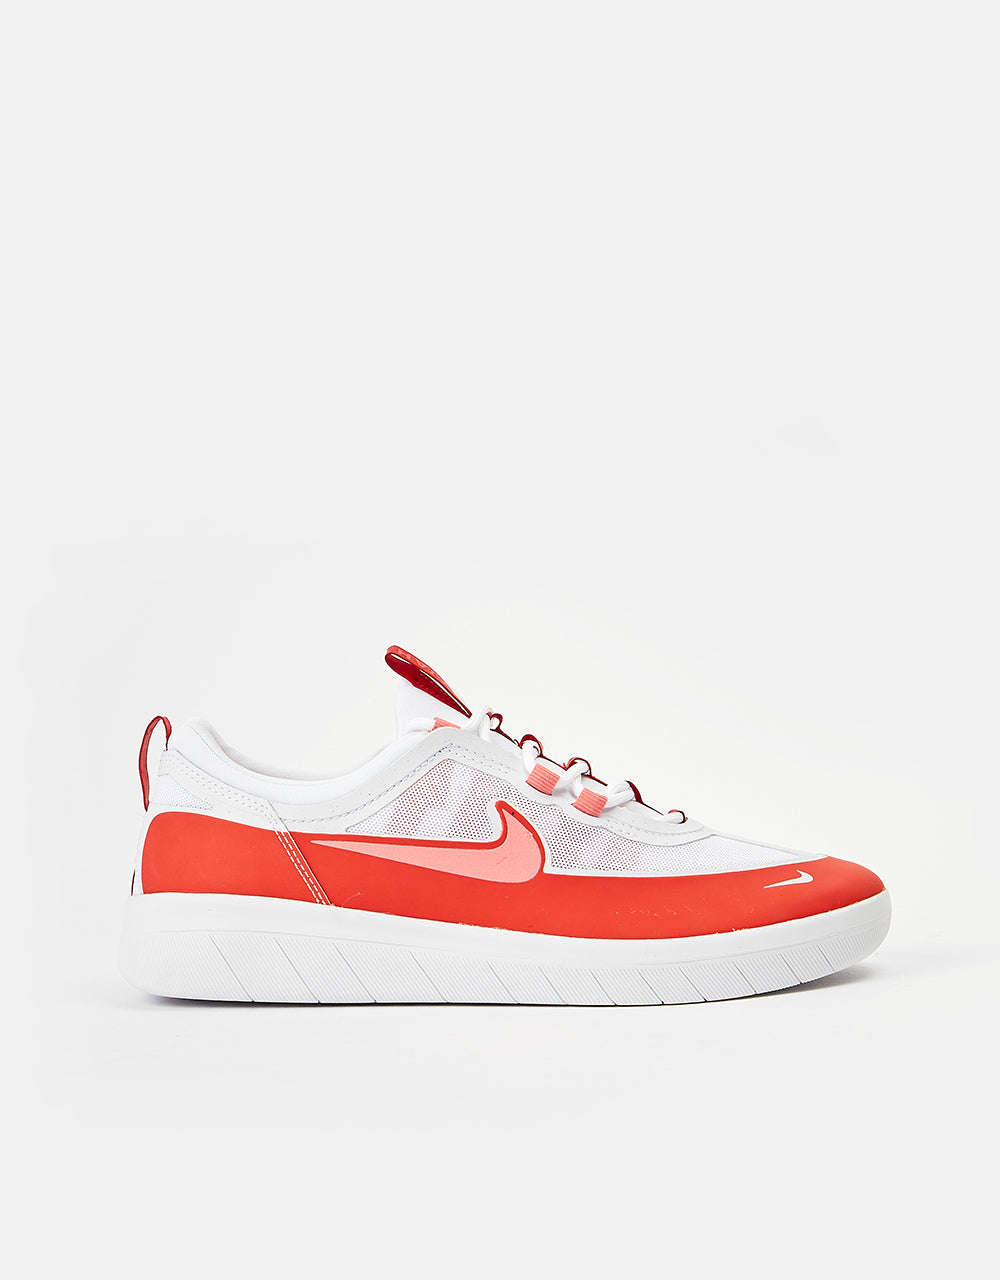 Nike SB Nyjah Free 2 Skate Shoes - Lobster/Pink Gaze -Lobster-White